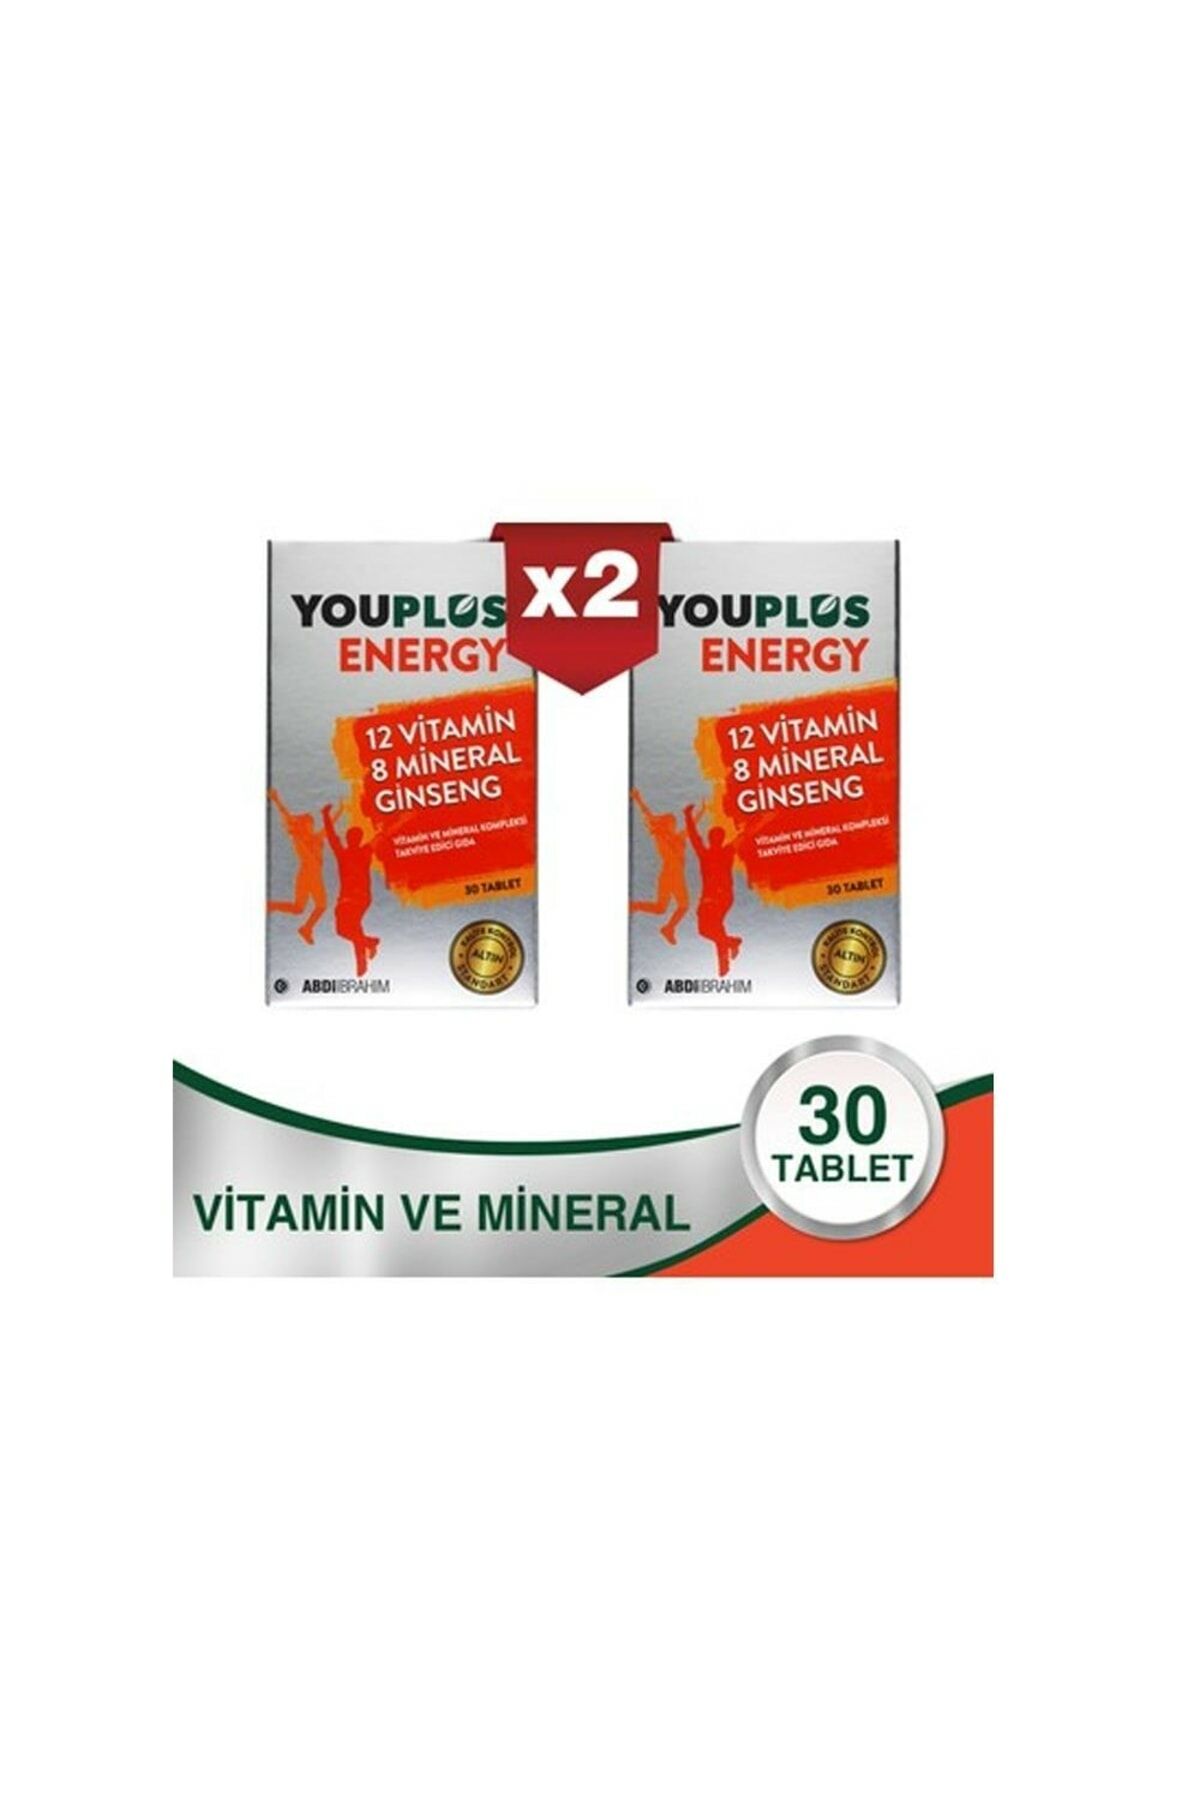 Youplus Energy 12 Vitamin 8 Mineral Ginseng 30 Tablet - 2 Adet